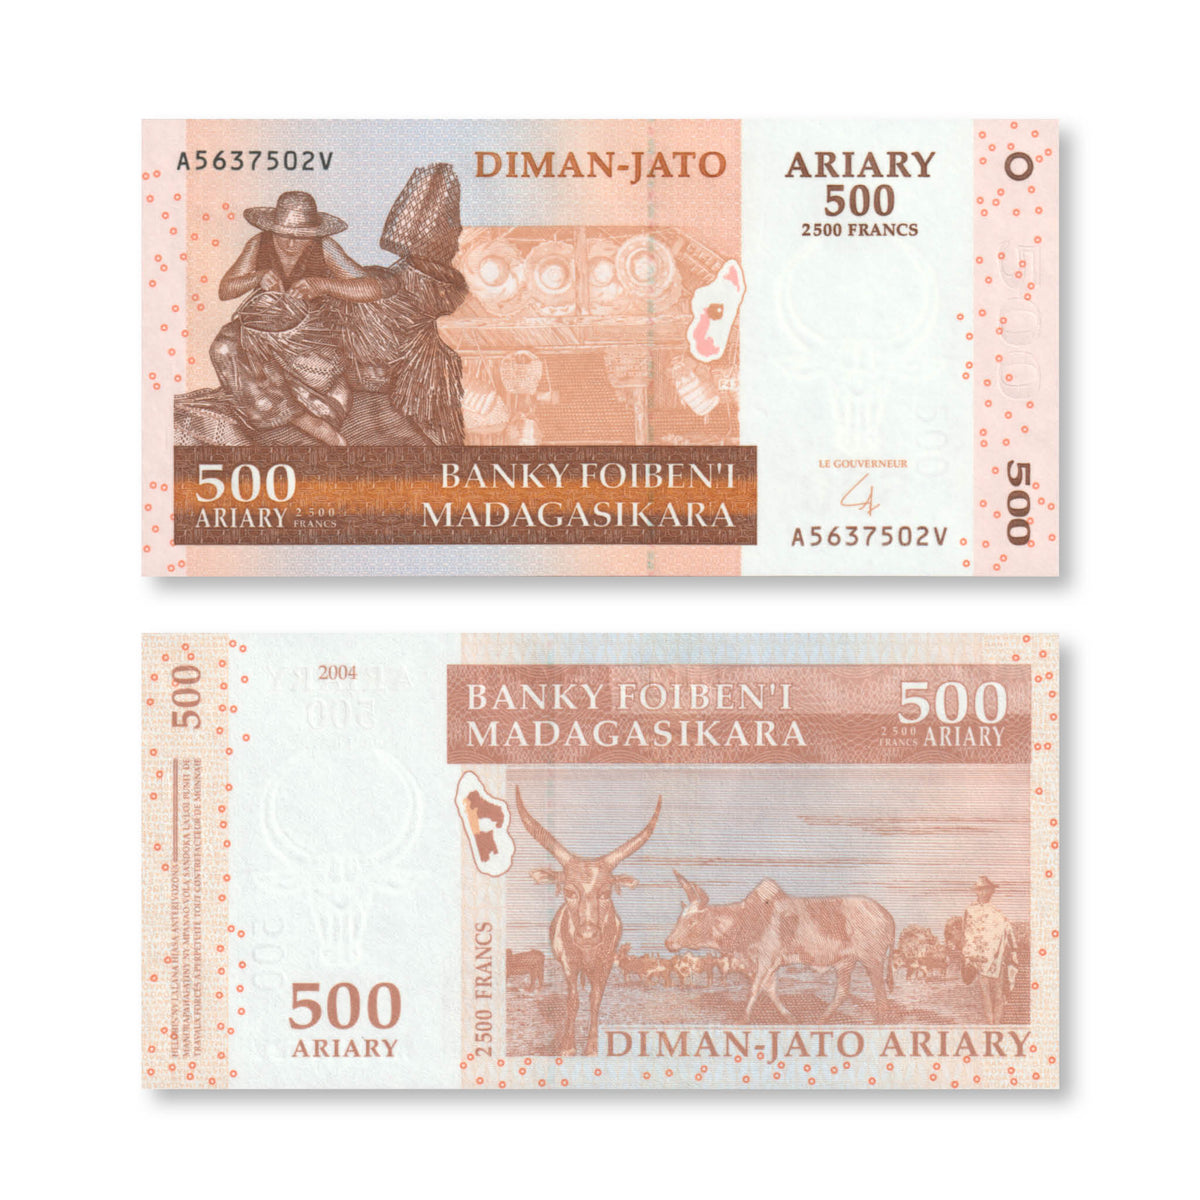 Madagascar 500 Ariary, 2004 (2014), B322c, P95a, UNC - Robert's World Money - World Banknotes